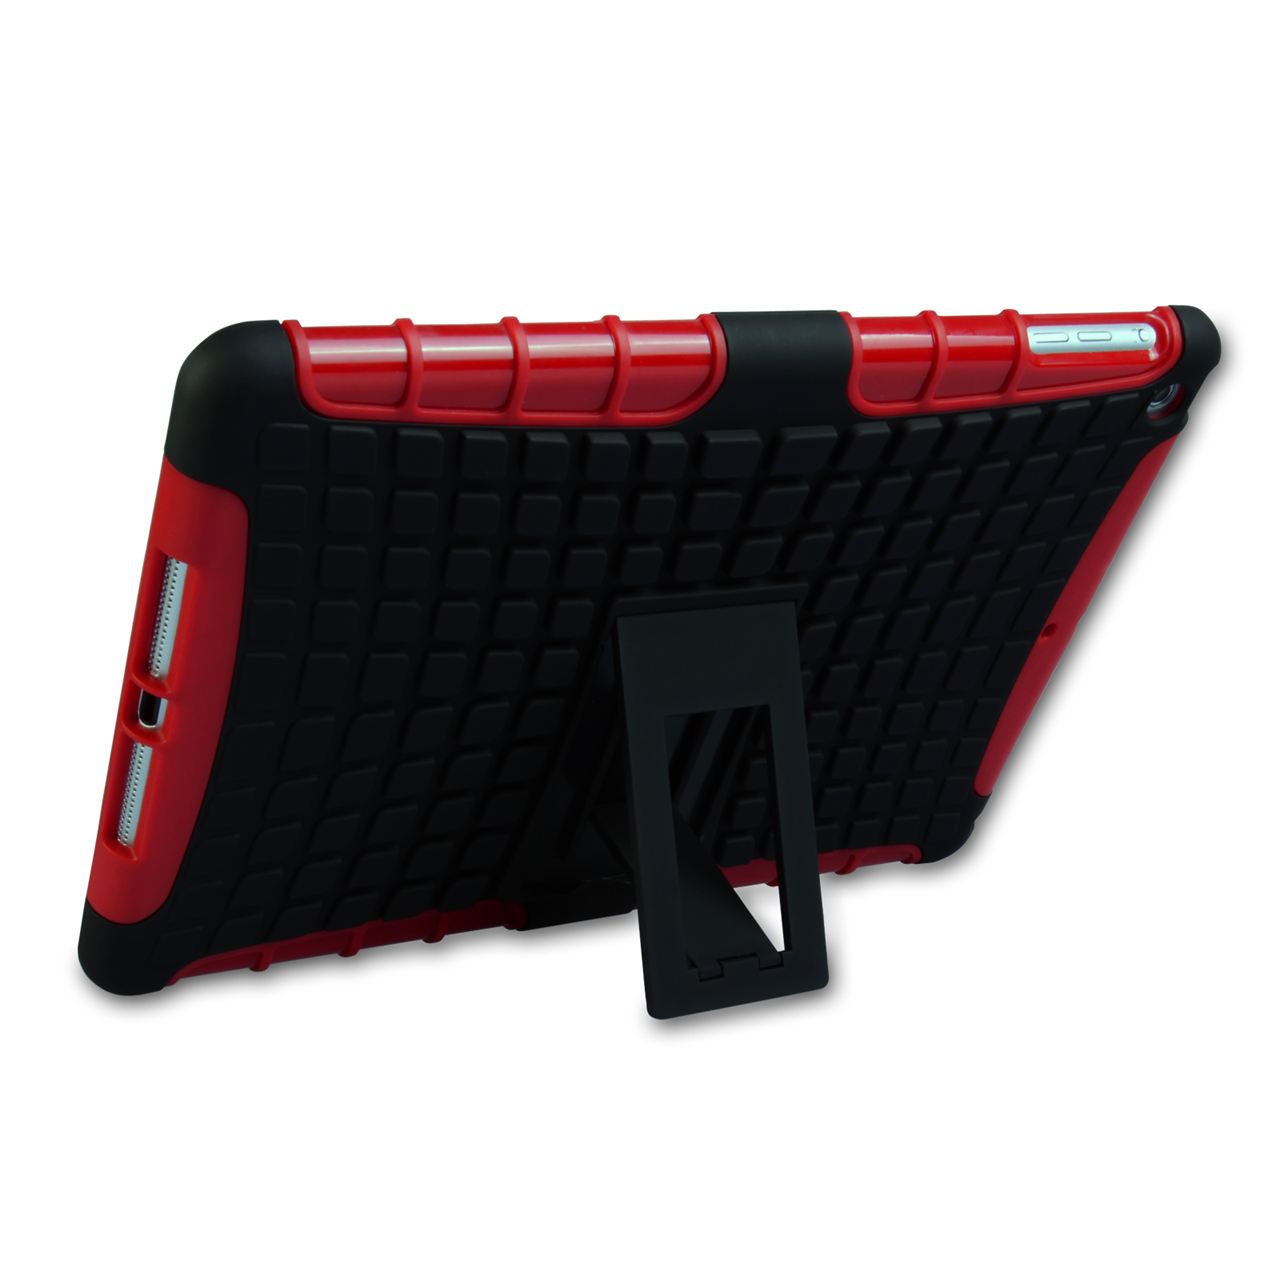 Caseflex iPad Air Tough Stand Cover - Red